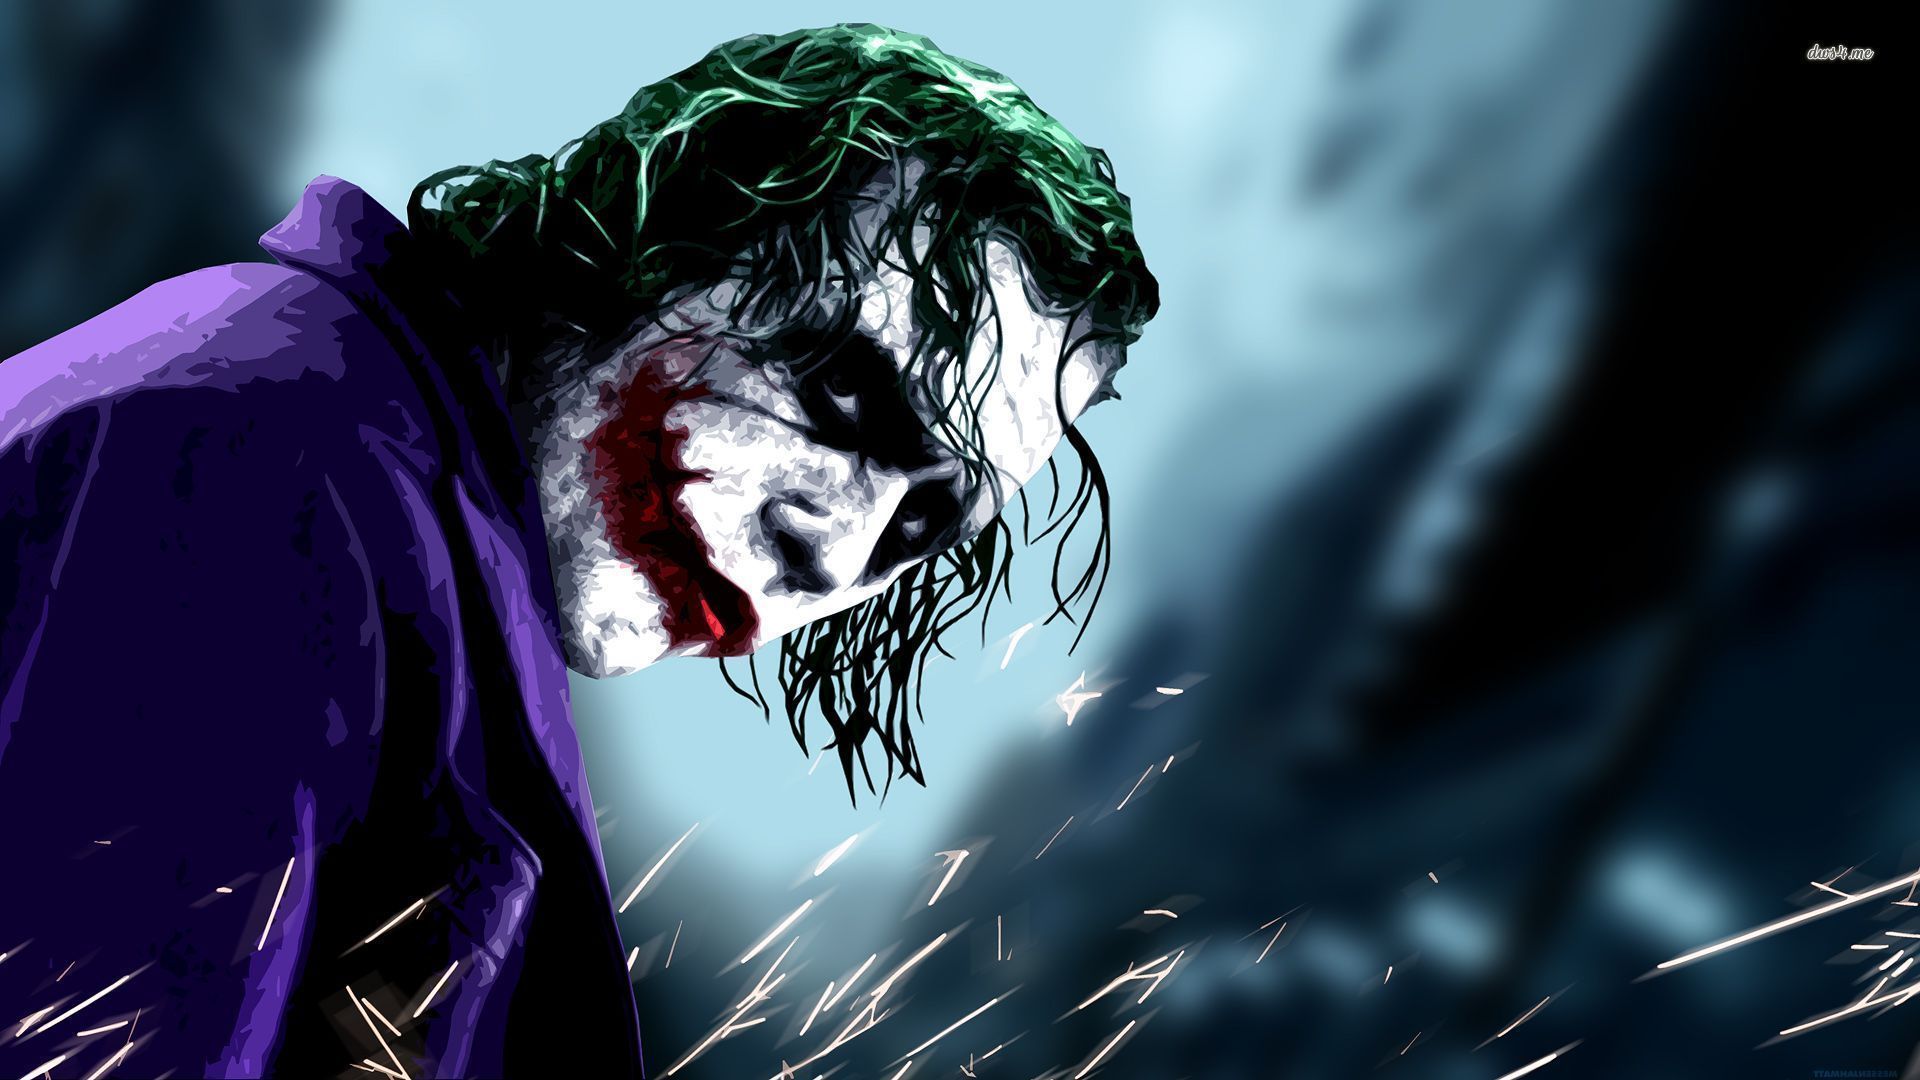 Joker HD Fondos de pantalla 1080p | Joker | Fondos de pantalla de Joker, Joker hd